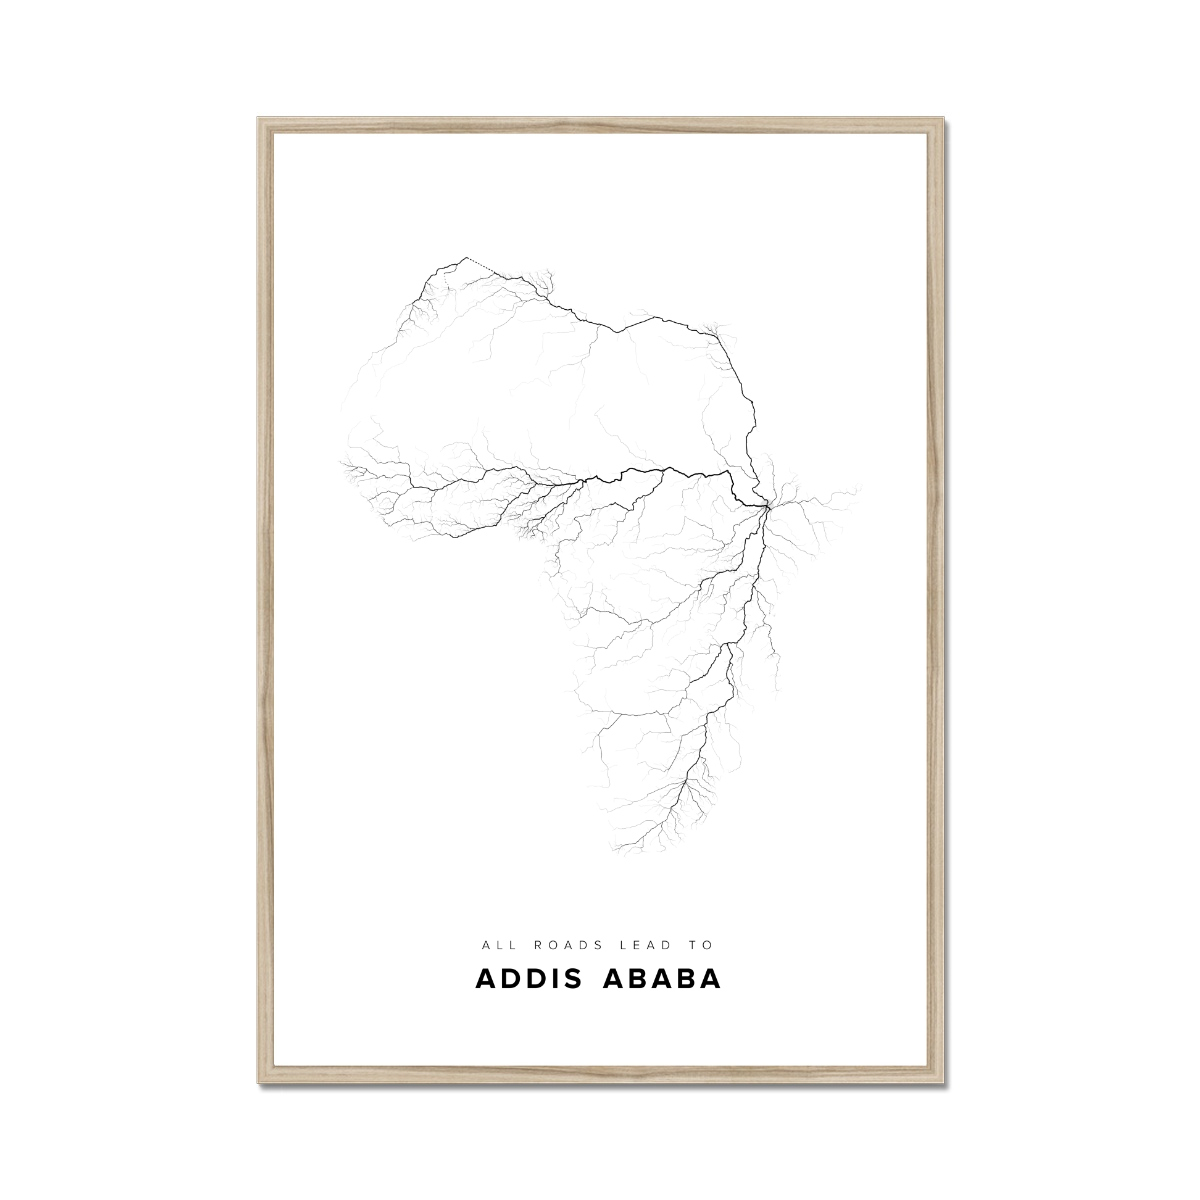 All roads lead to Addis Ababa (Ethiopia) Fine Art Map Print